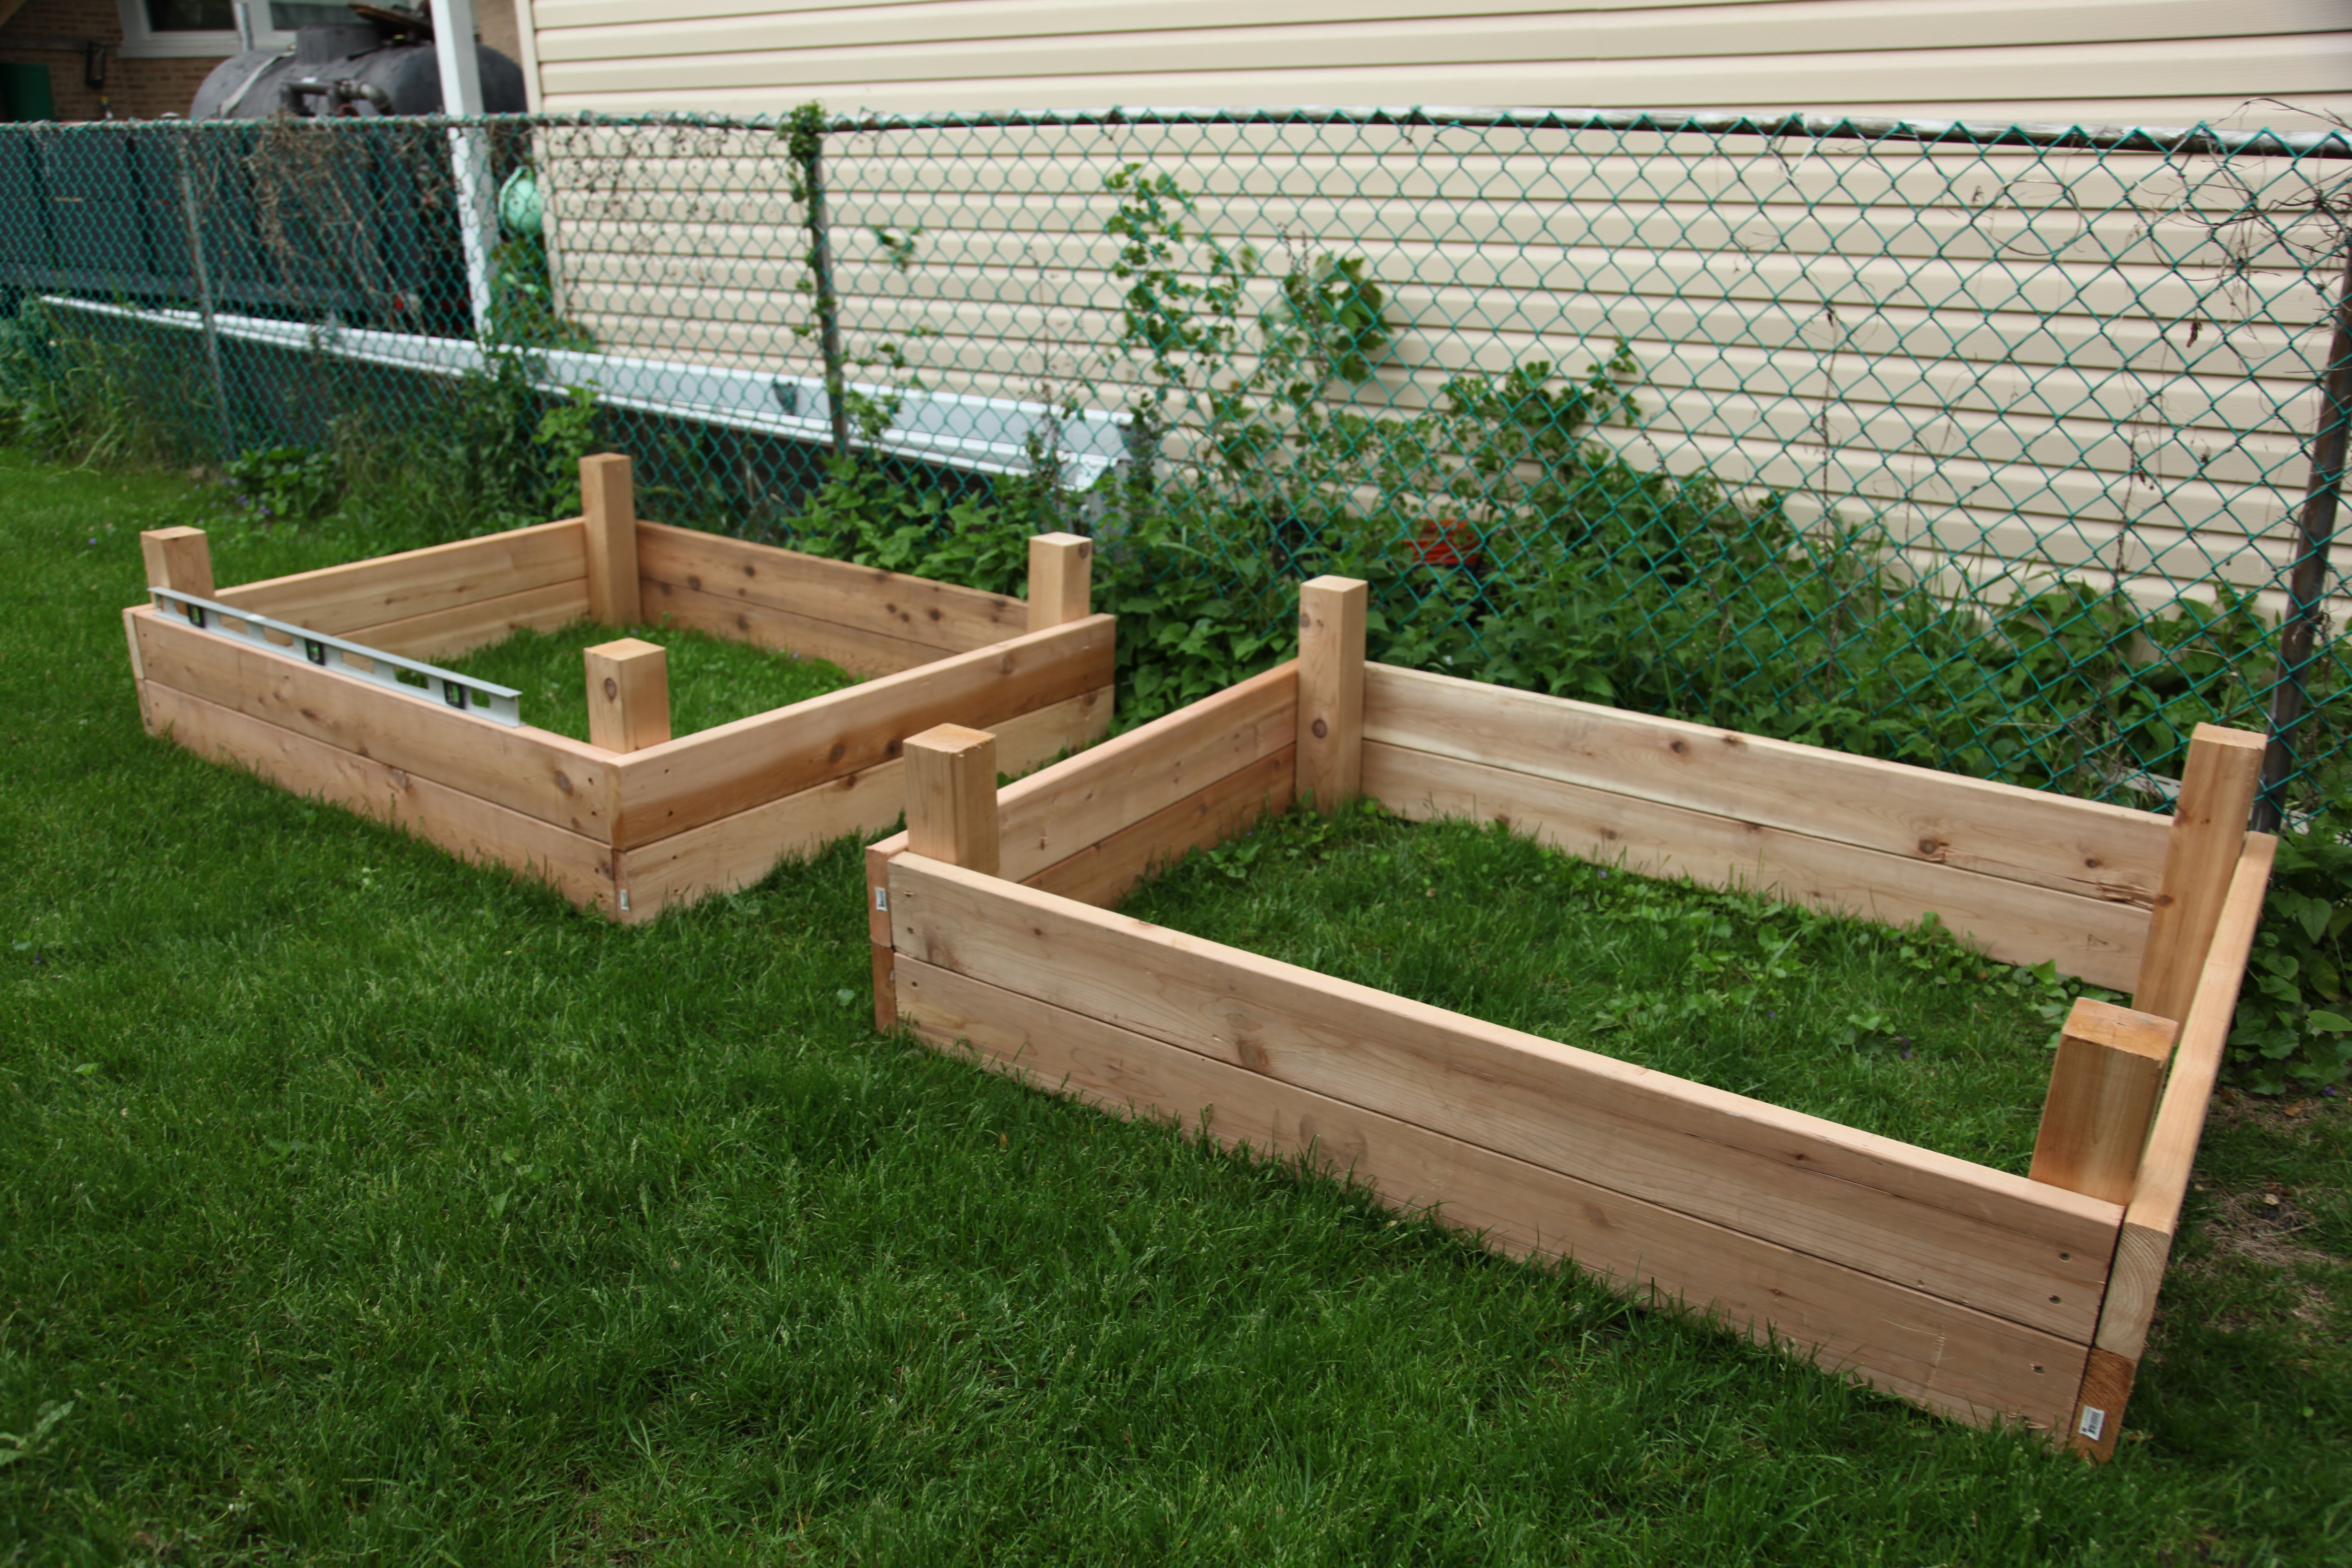 Best ideas about Raised Garden Beds DIY
. Save or Pin DIY Raised Garden Beds Now.